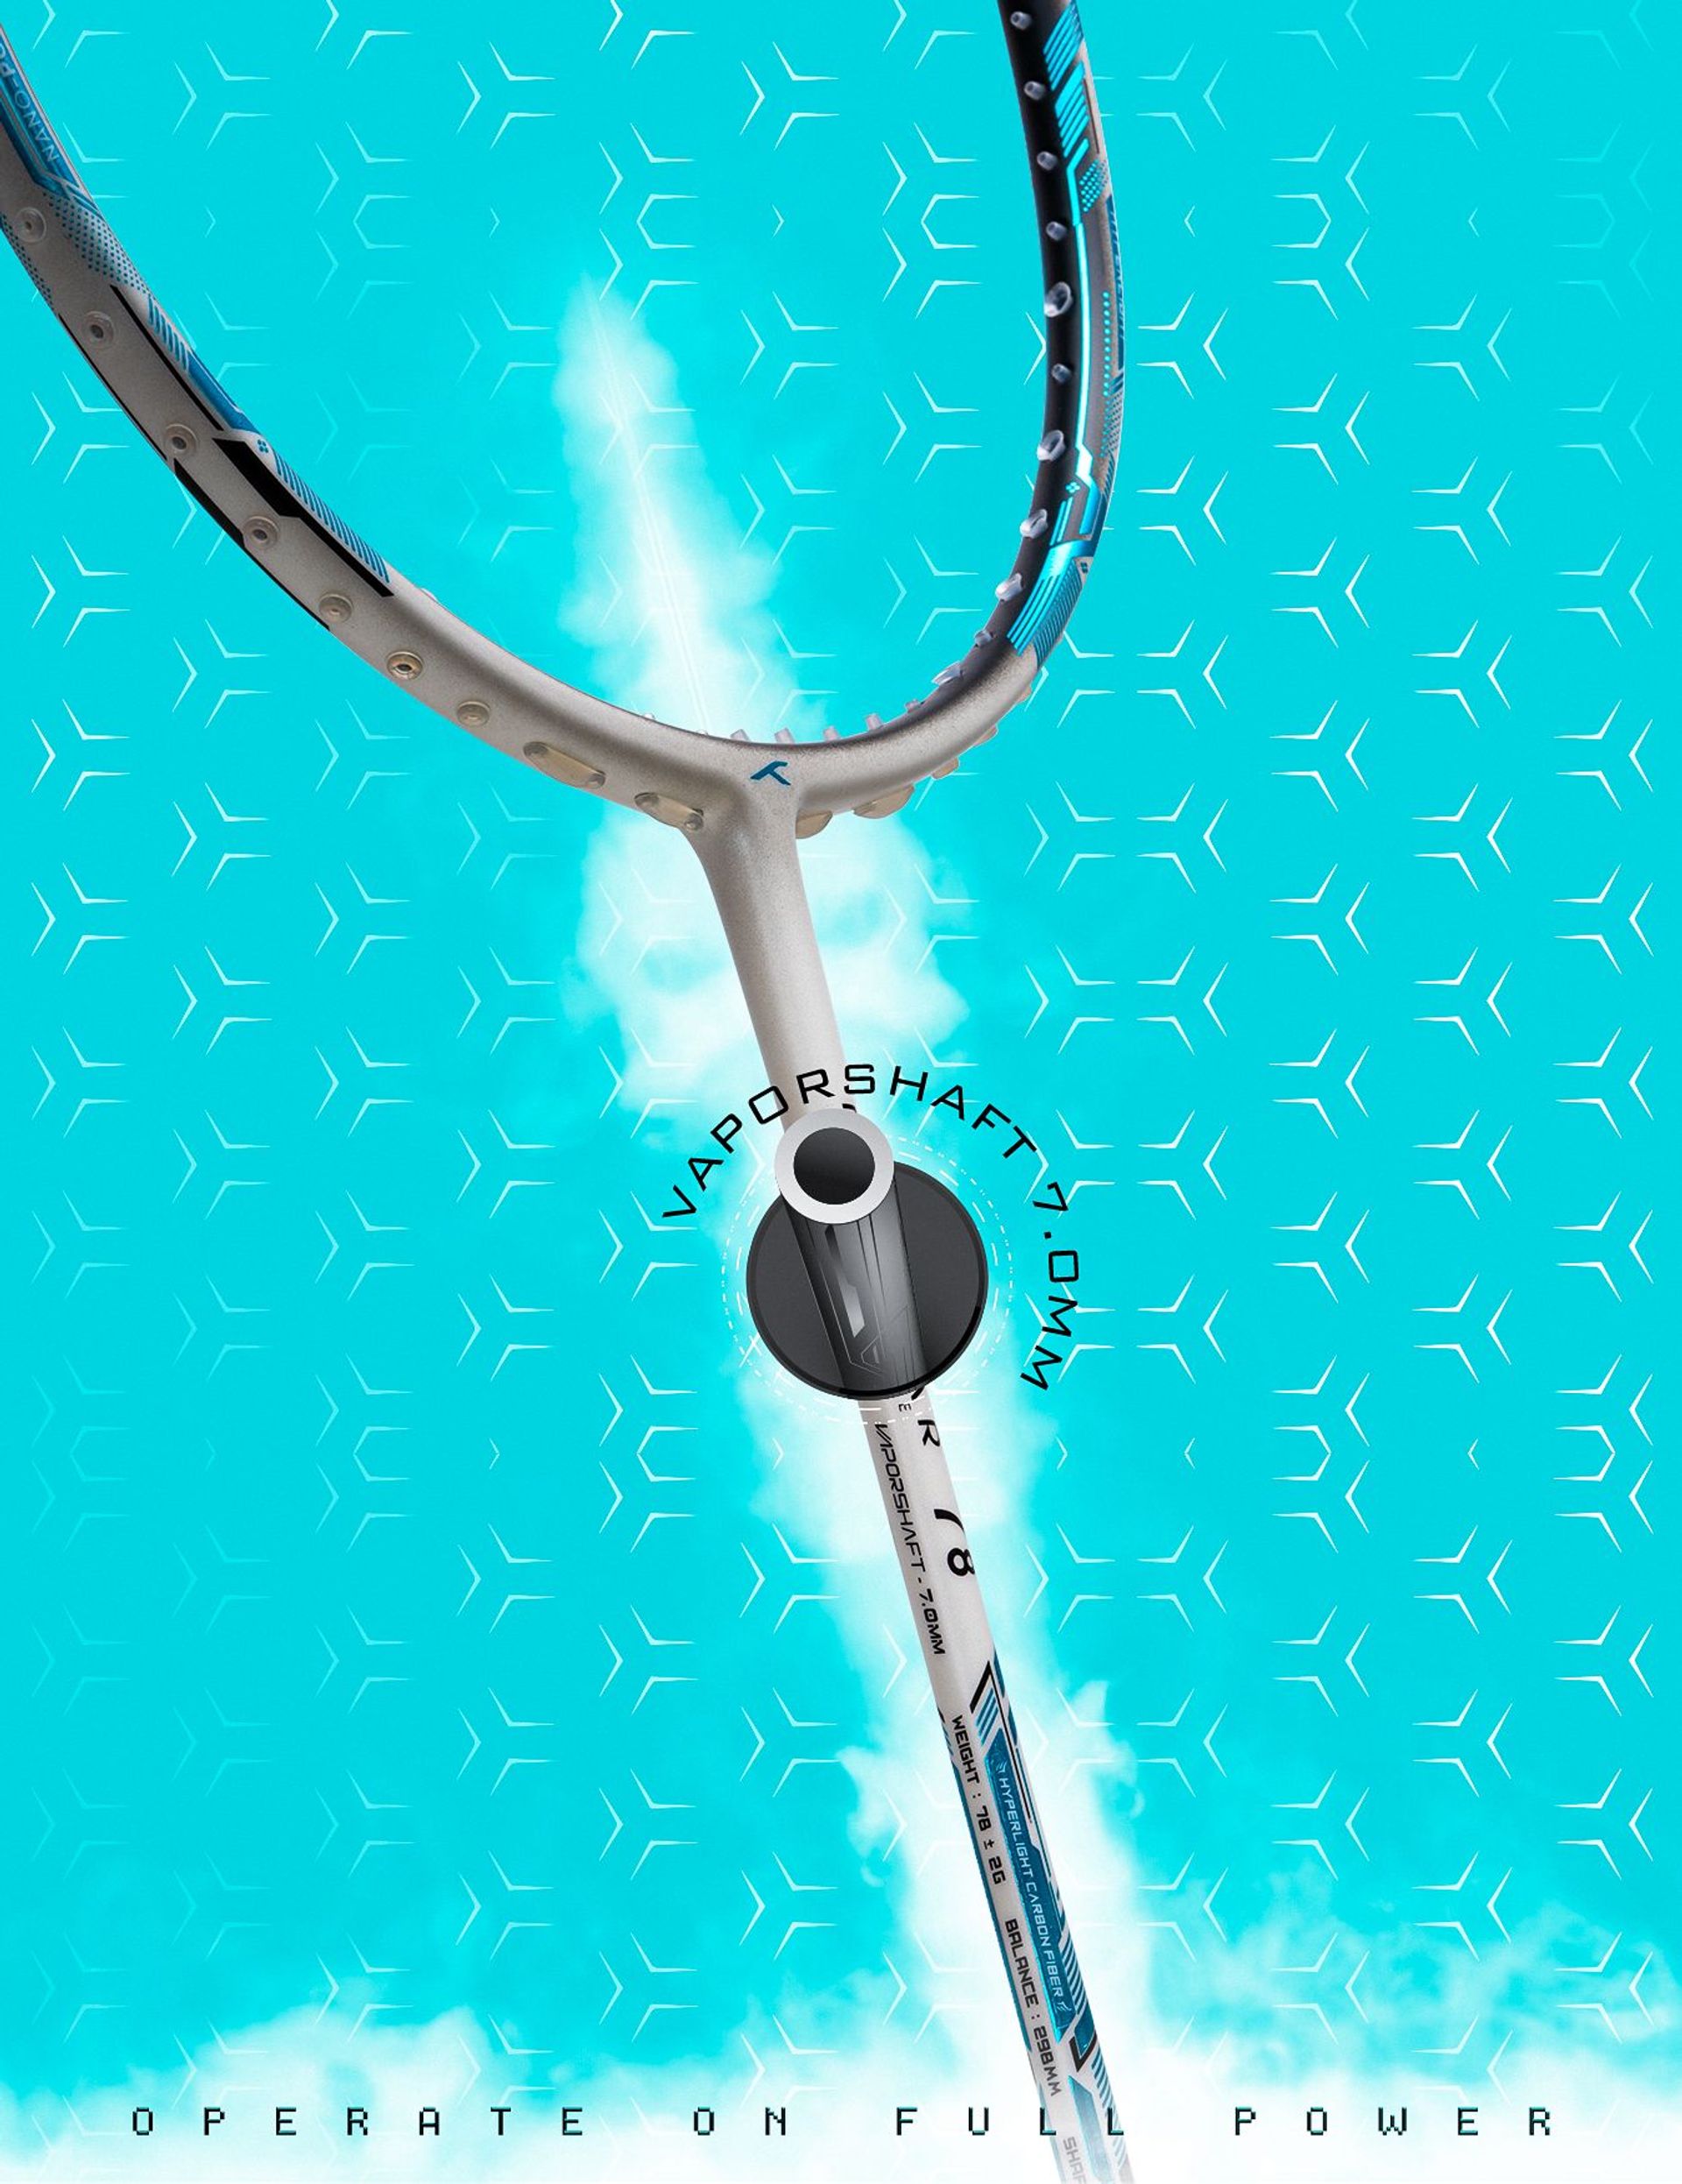 Nuclear 78 - Badminton Racket - Vaporshaft 7.0mm